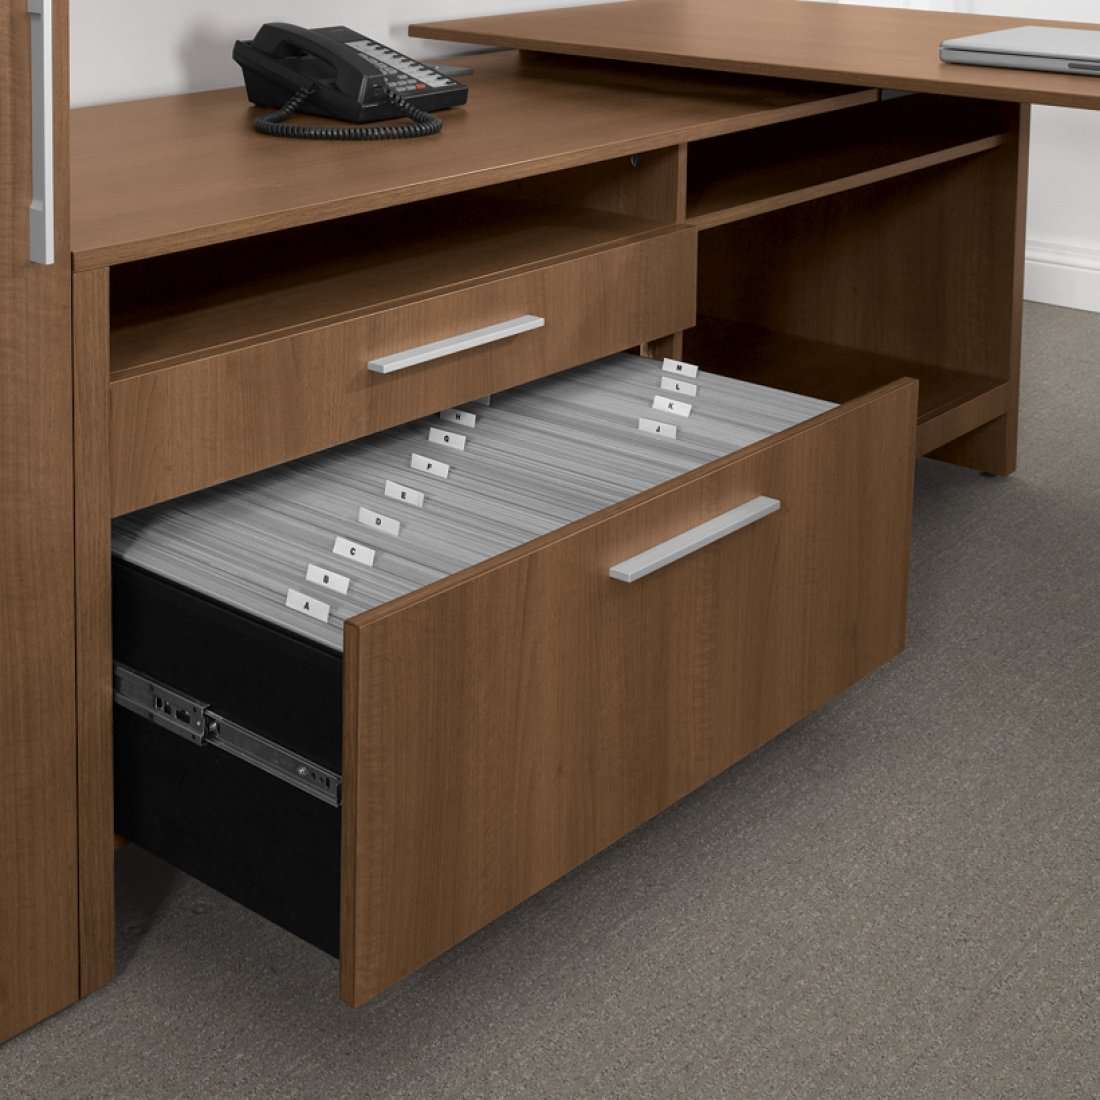 L72D - 6'x6' L-Shape Workstation(Freestanding Desk and Credenza-L) - Kainosbuy.com